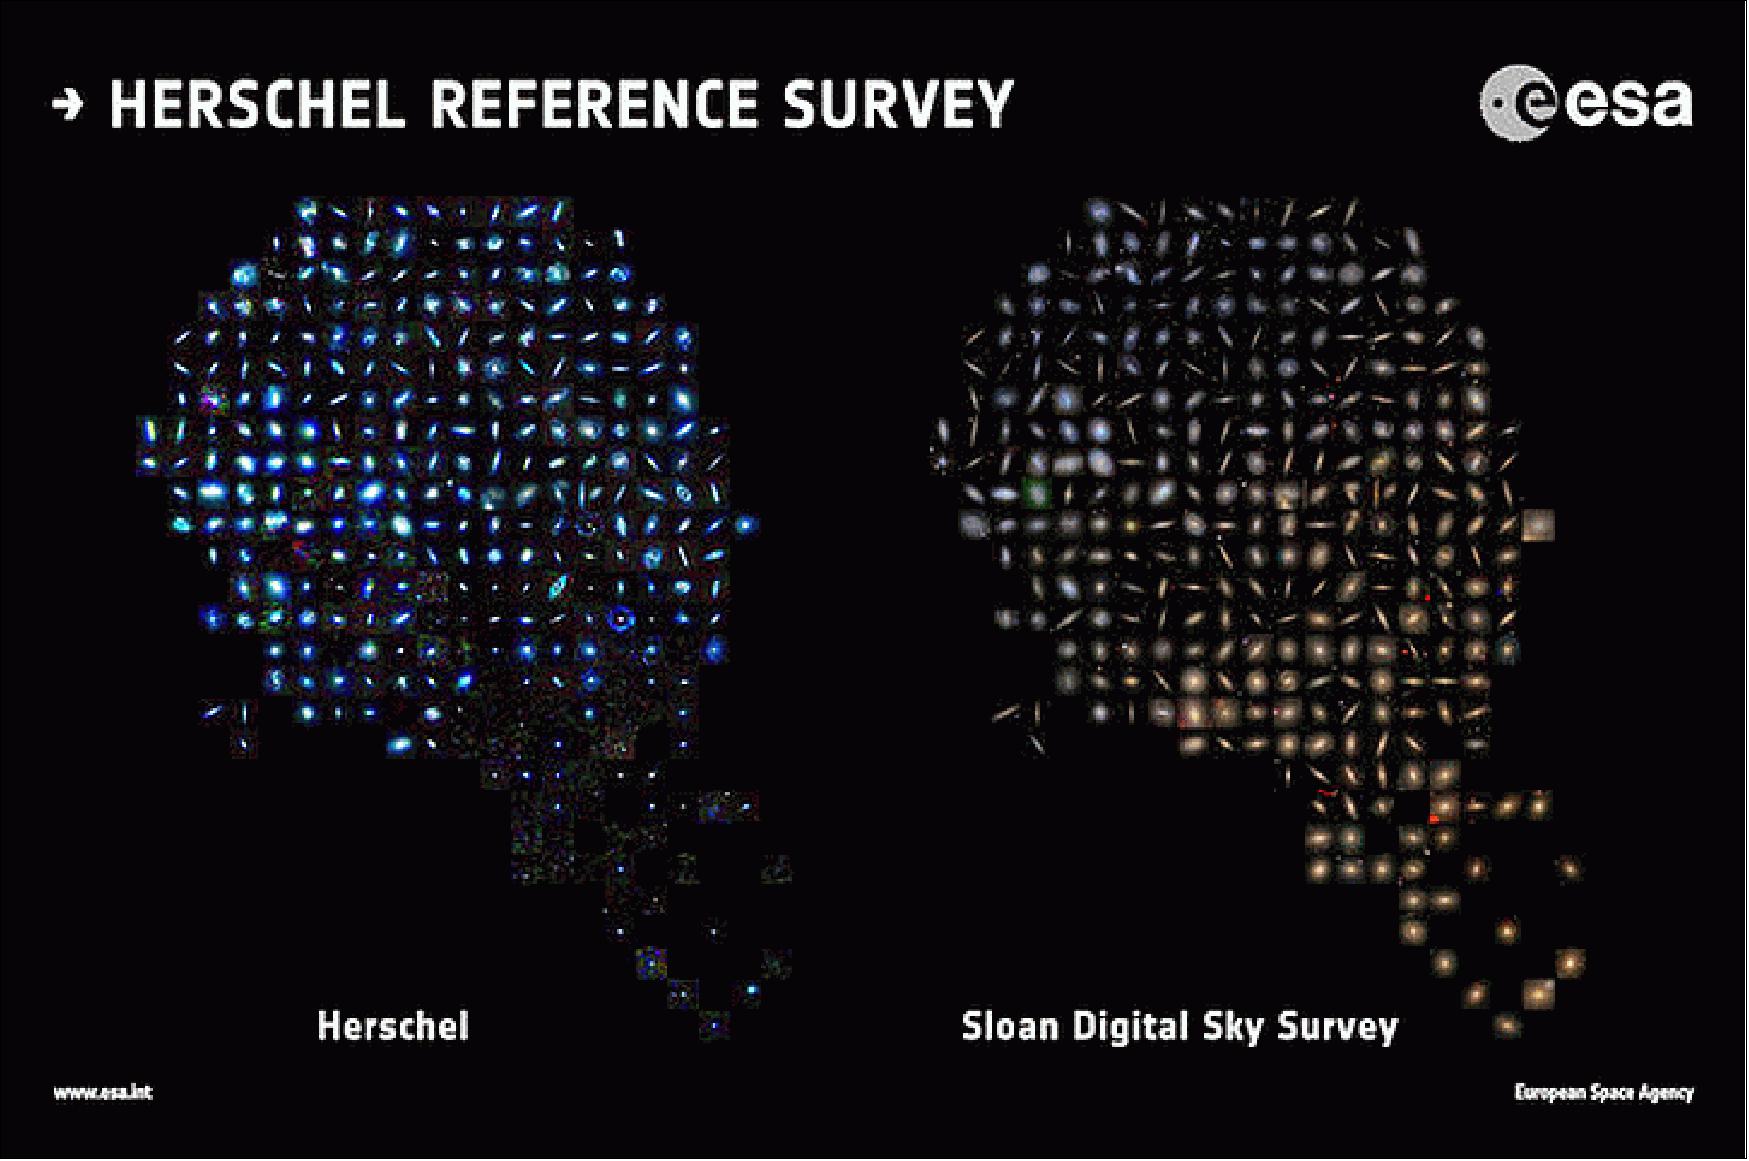 Figure 60: Herschel completes the largest survey in the infrared and visible range of cosmic dust in the local universe [image credit: ESA/Herschel/HRS-SAG2 and HeViCS (Herschel Virgo Cluster Survey) Key Programs/Sloan Digital Sky Survey/ L. Cortese (Swinburne University)]